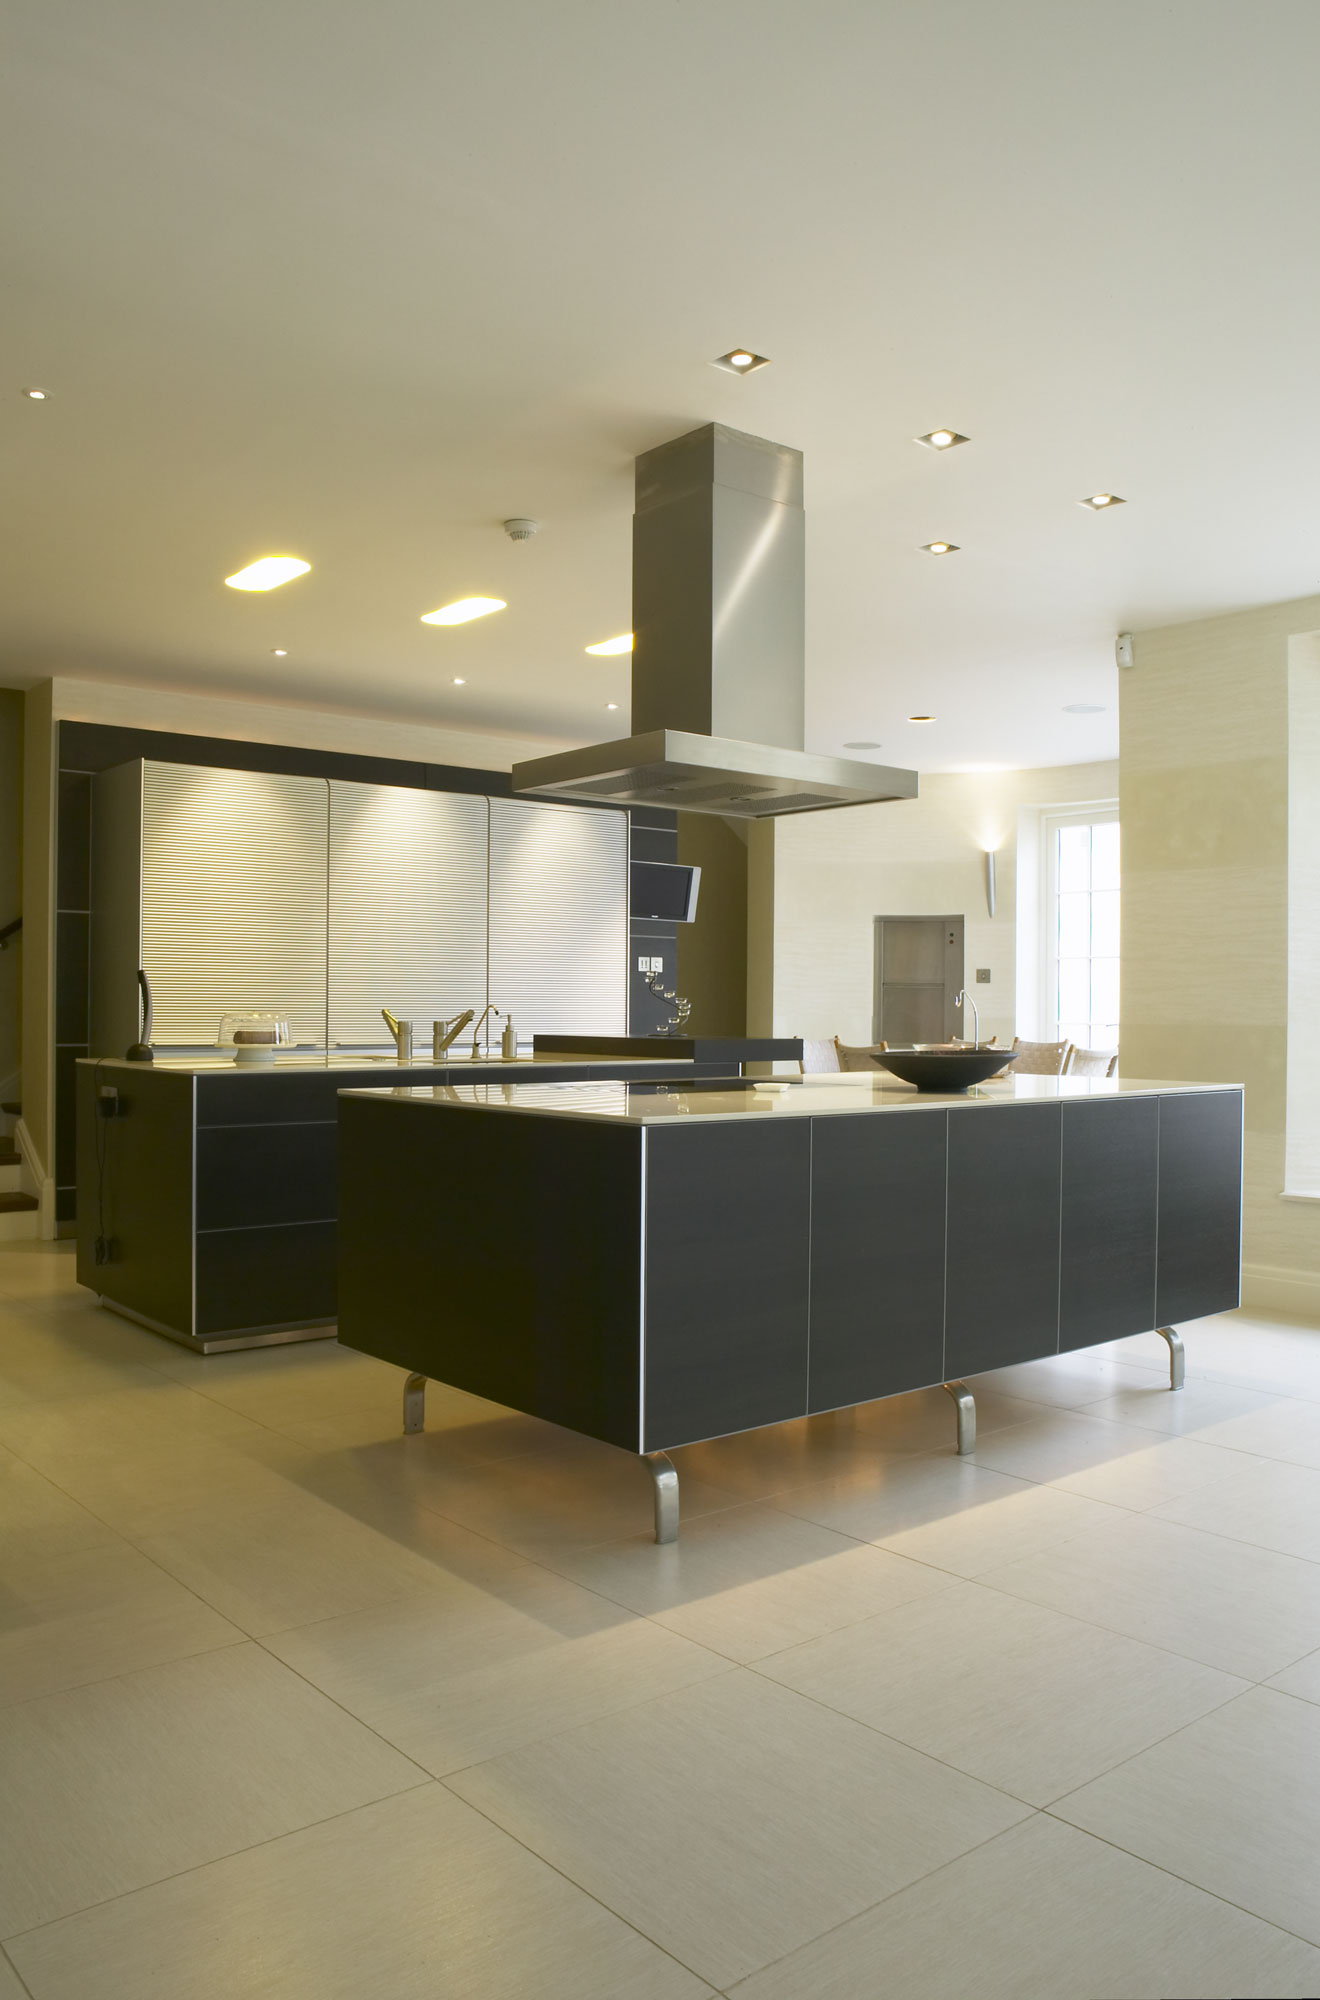 Whitestone House basement kitchen | Residential Photographer UK